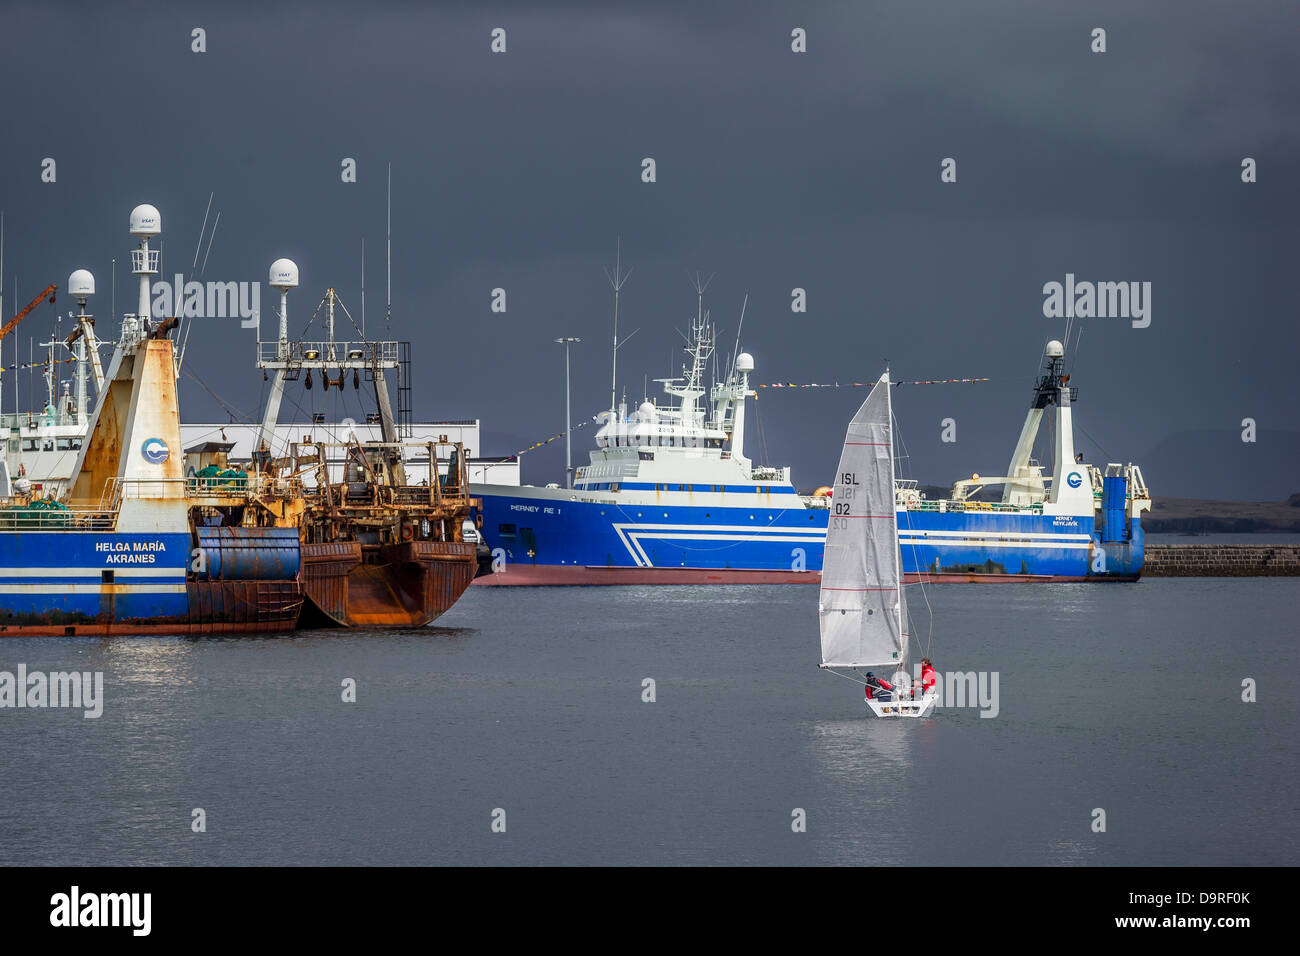 Sailboat and fishing trawlers in Reykjavik Harbor, Iceland Stock Photo